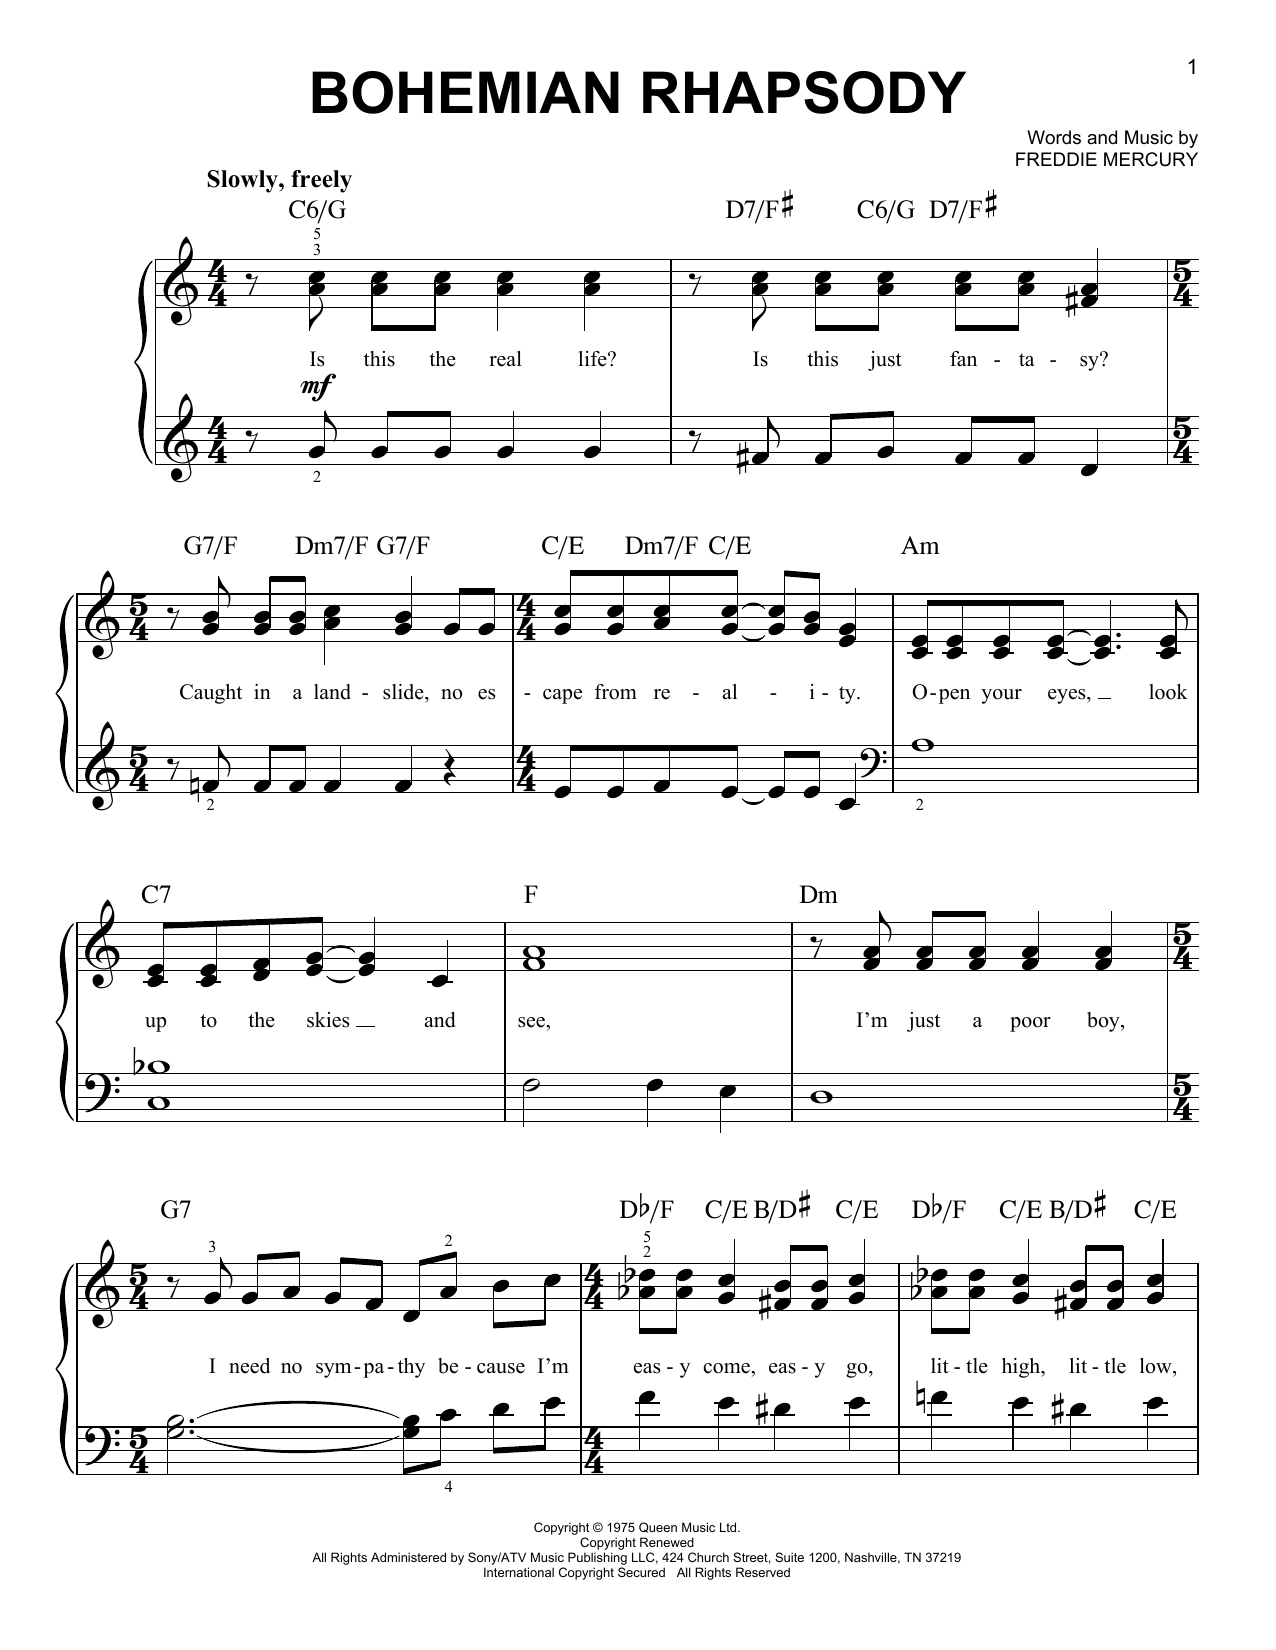 Bohemian rhapsody notes for piano pdf torrent